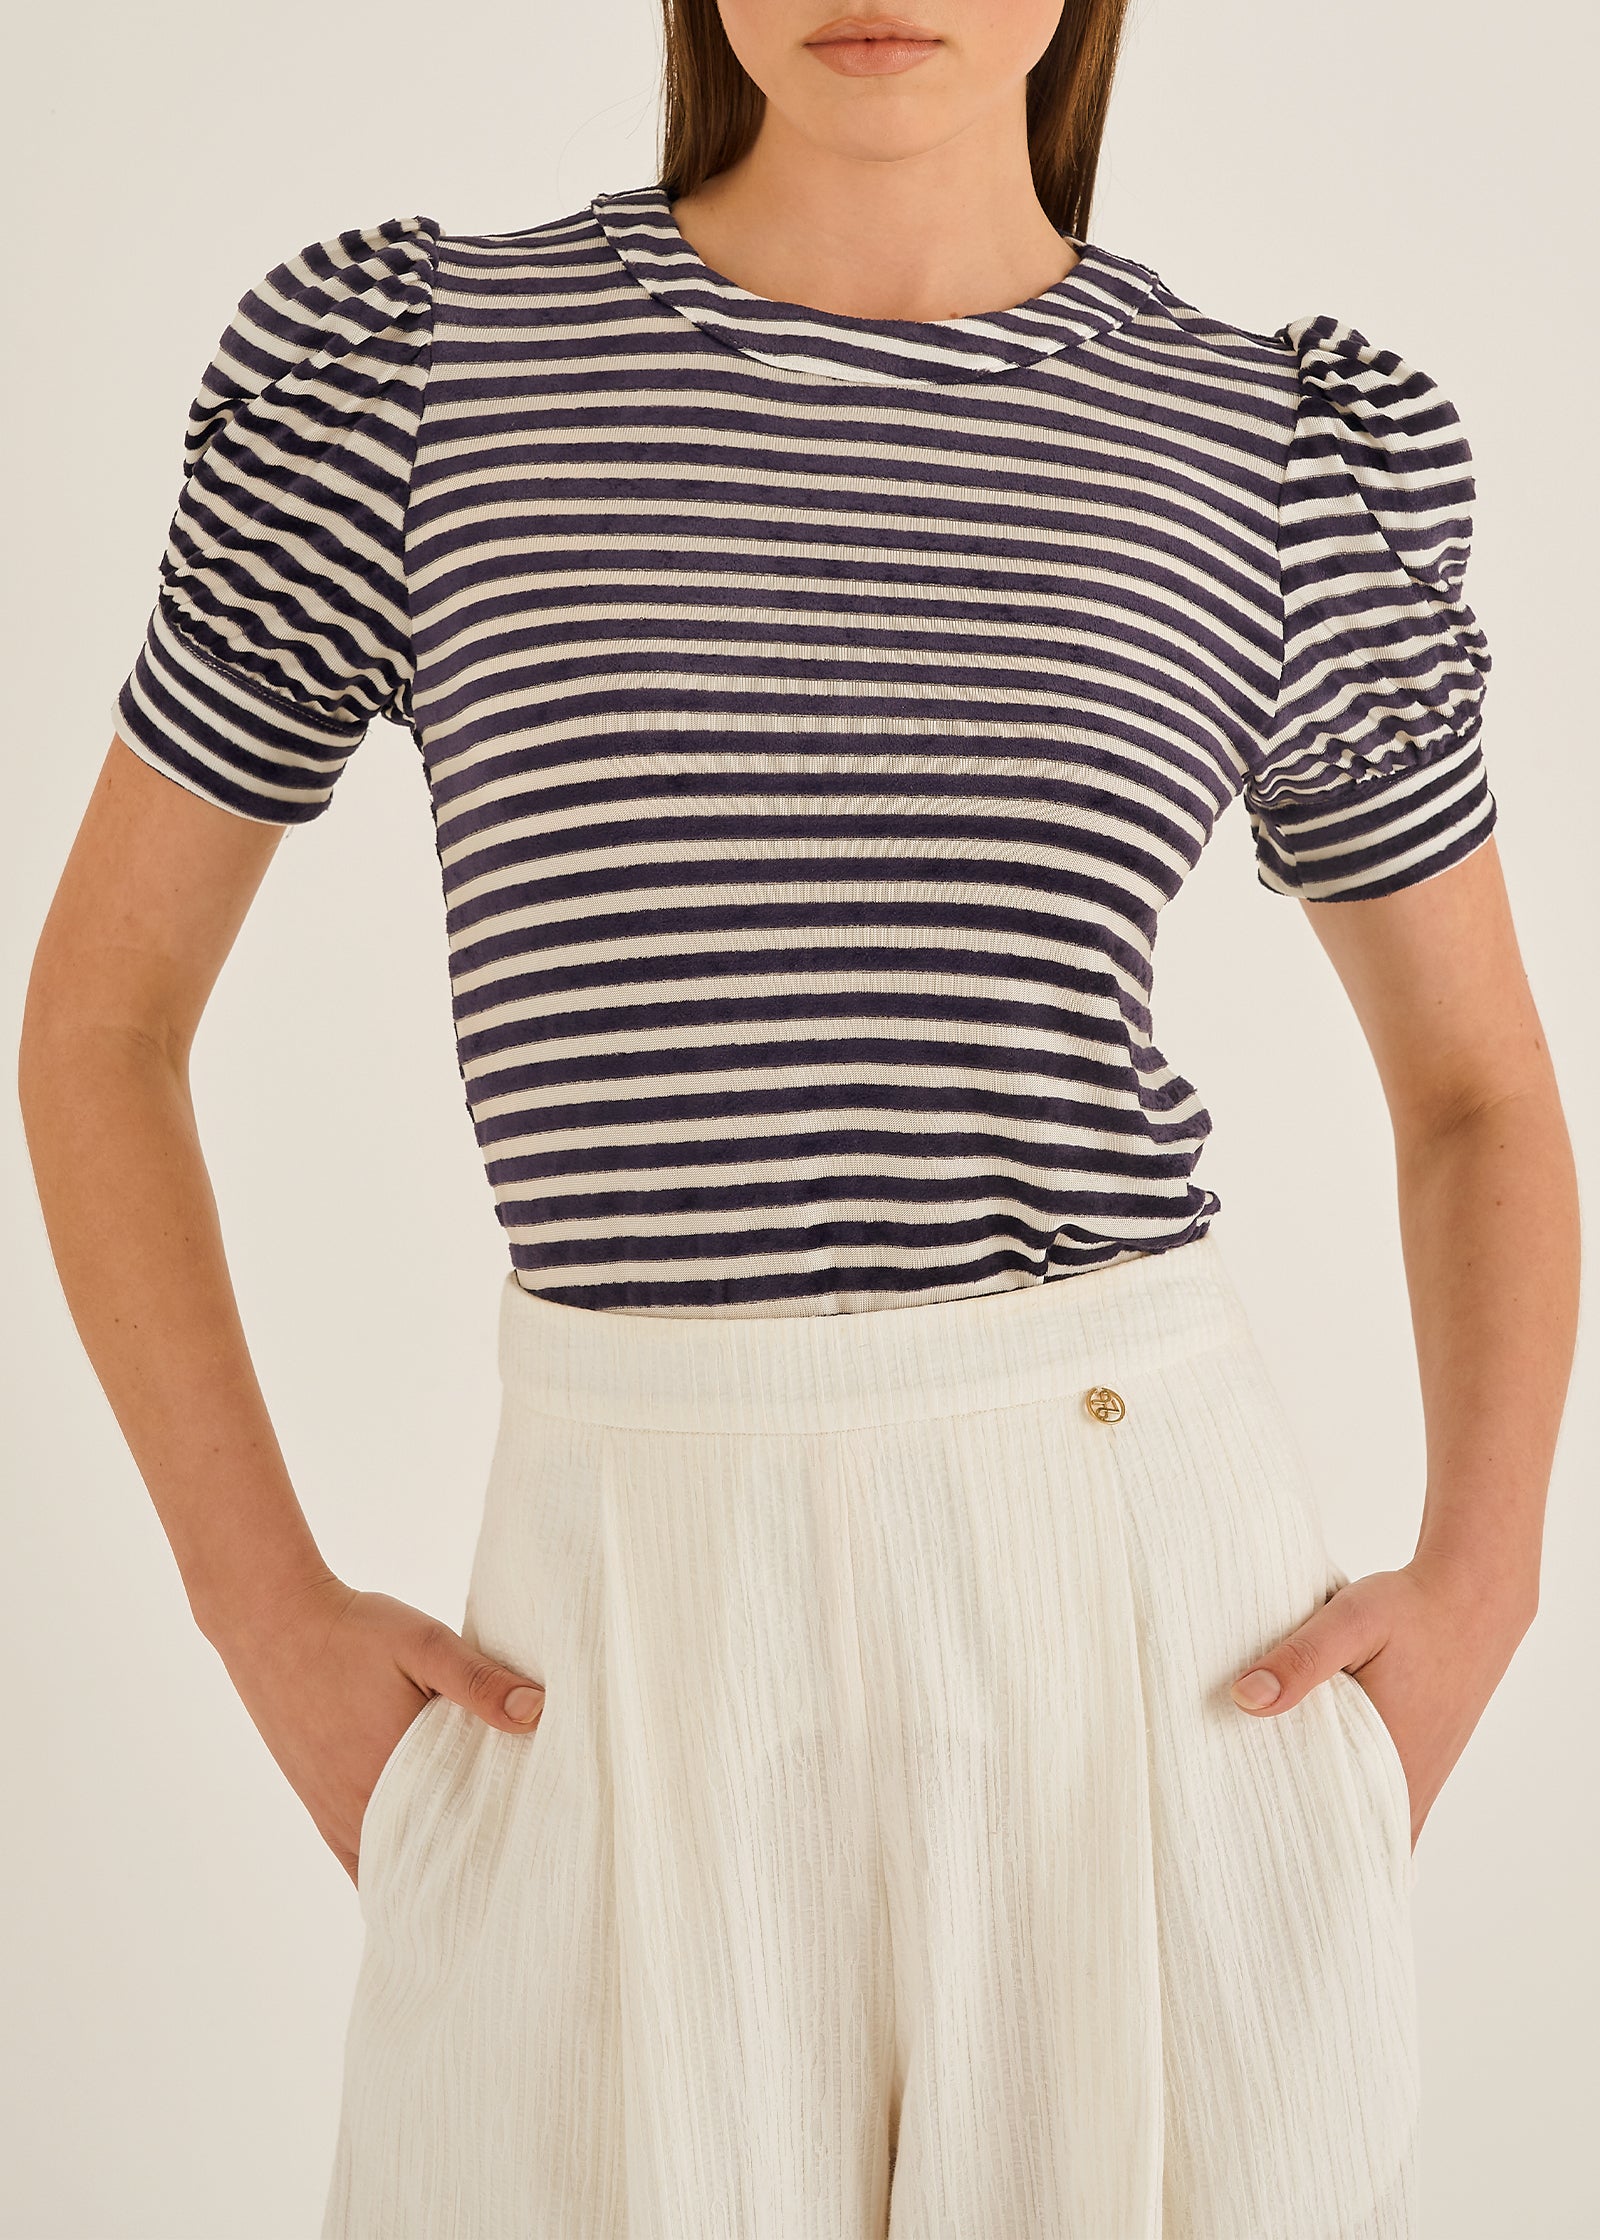 Como T-Shirt | Navy Marine Stripe